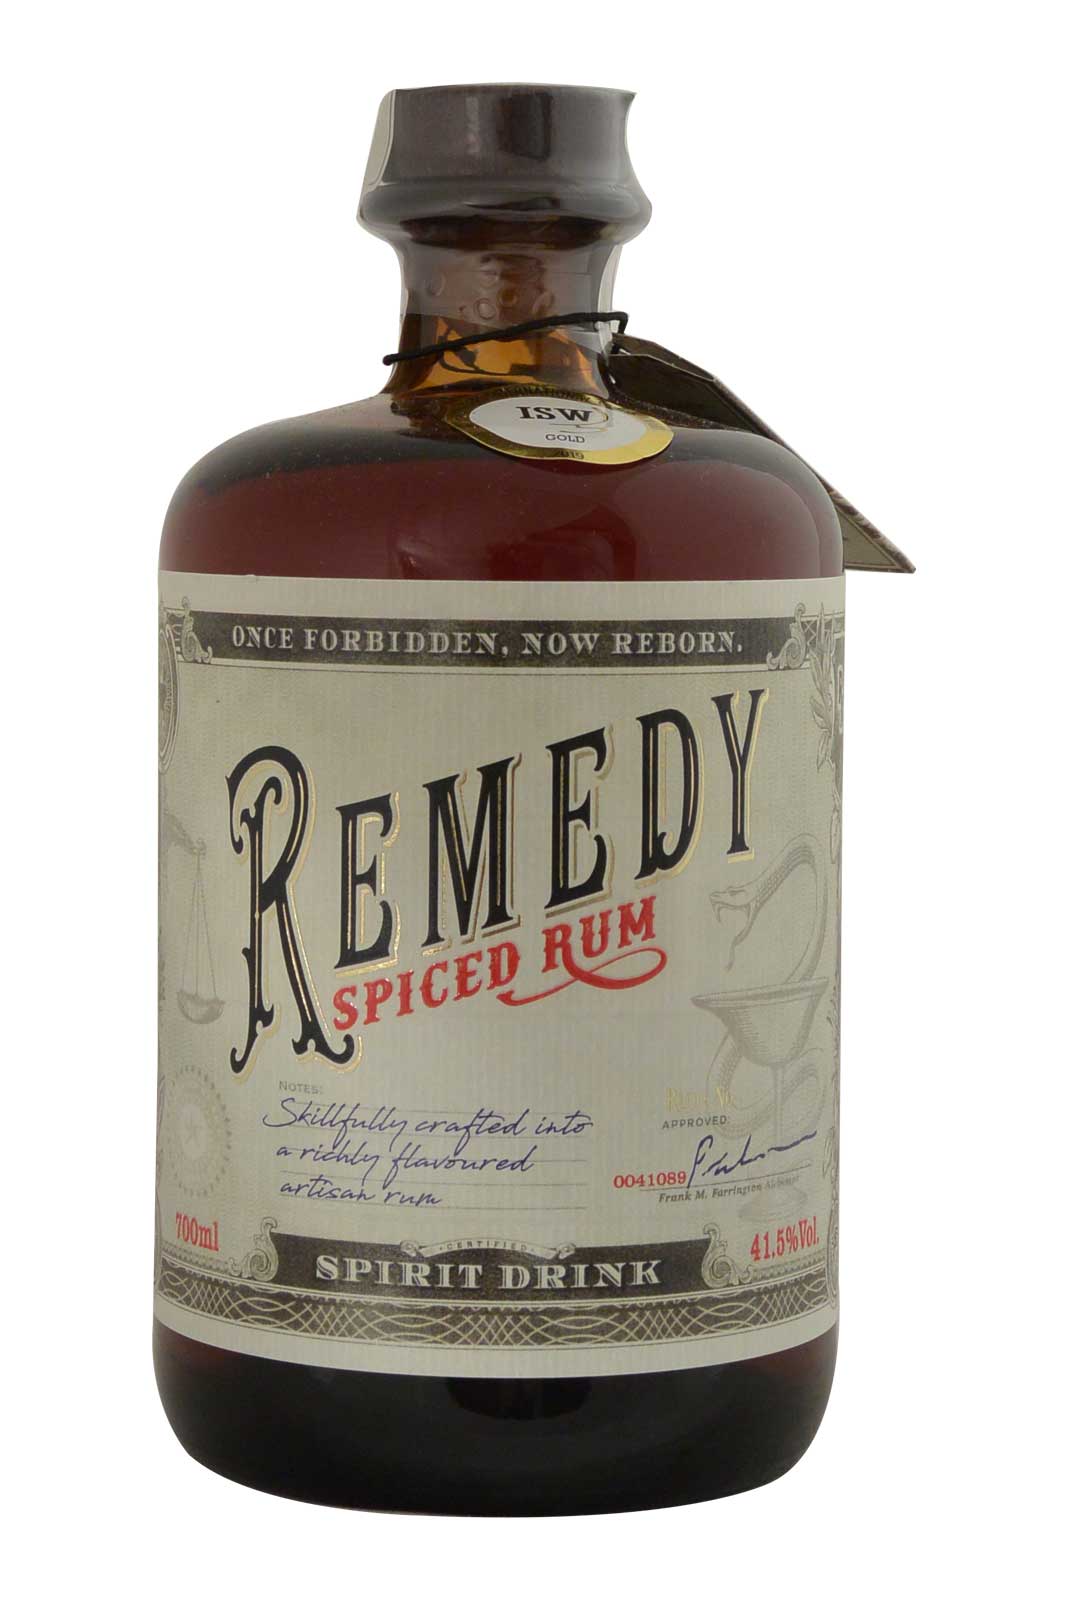 Remedy Spiced Rum